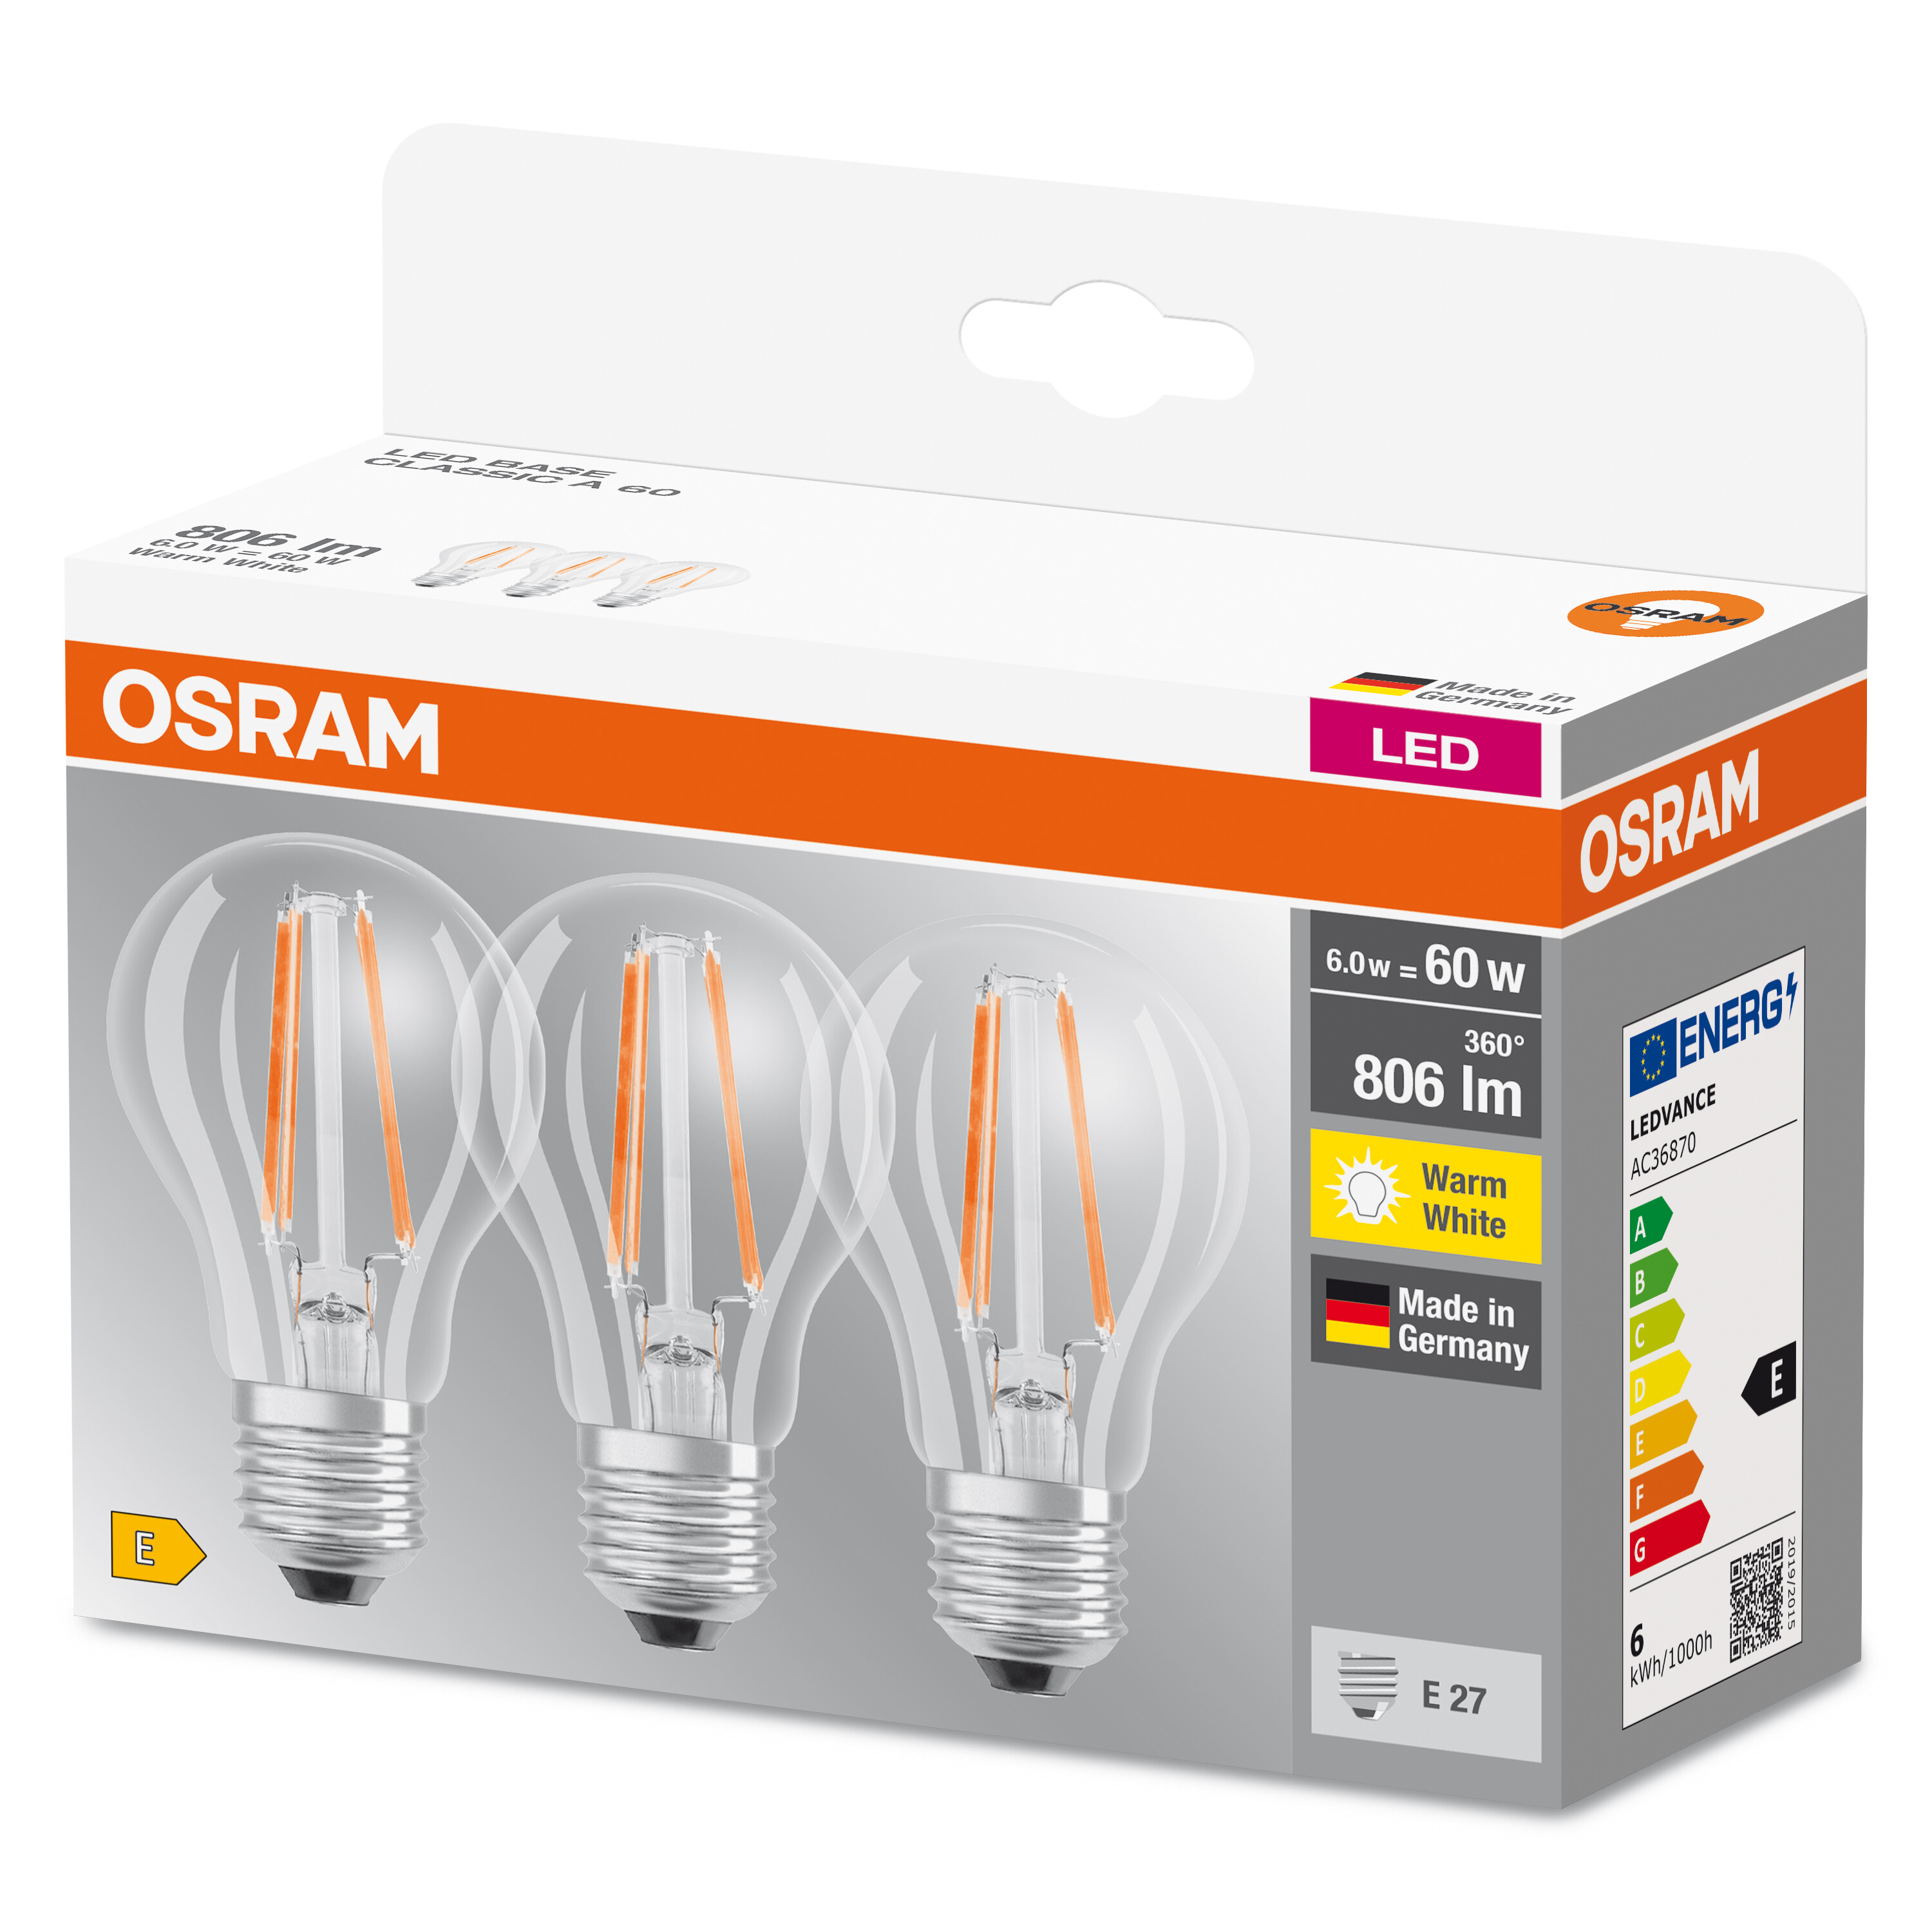 OSRAM  LED BASE CLASSIC 806 A LED Warmweiß Lampe Lumen